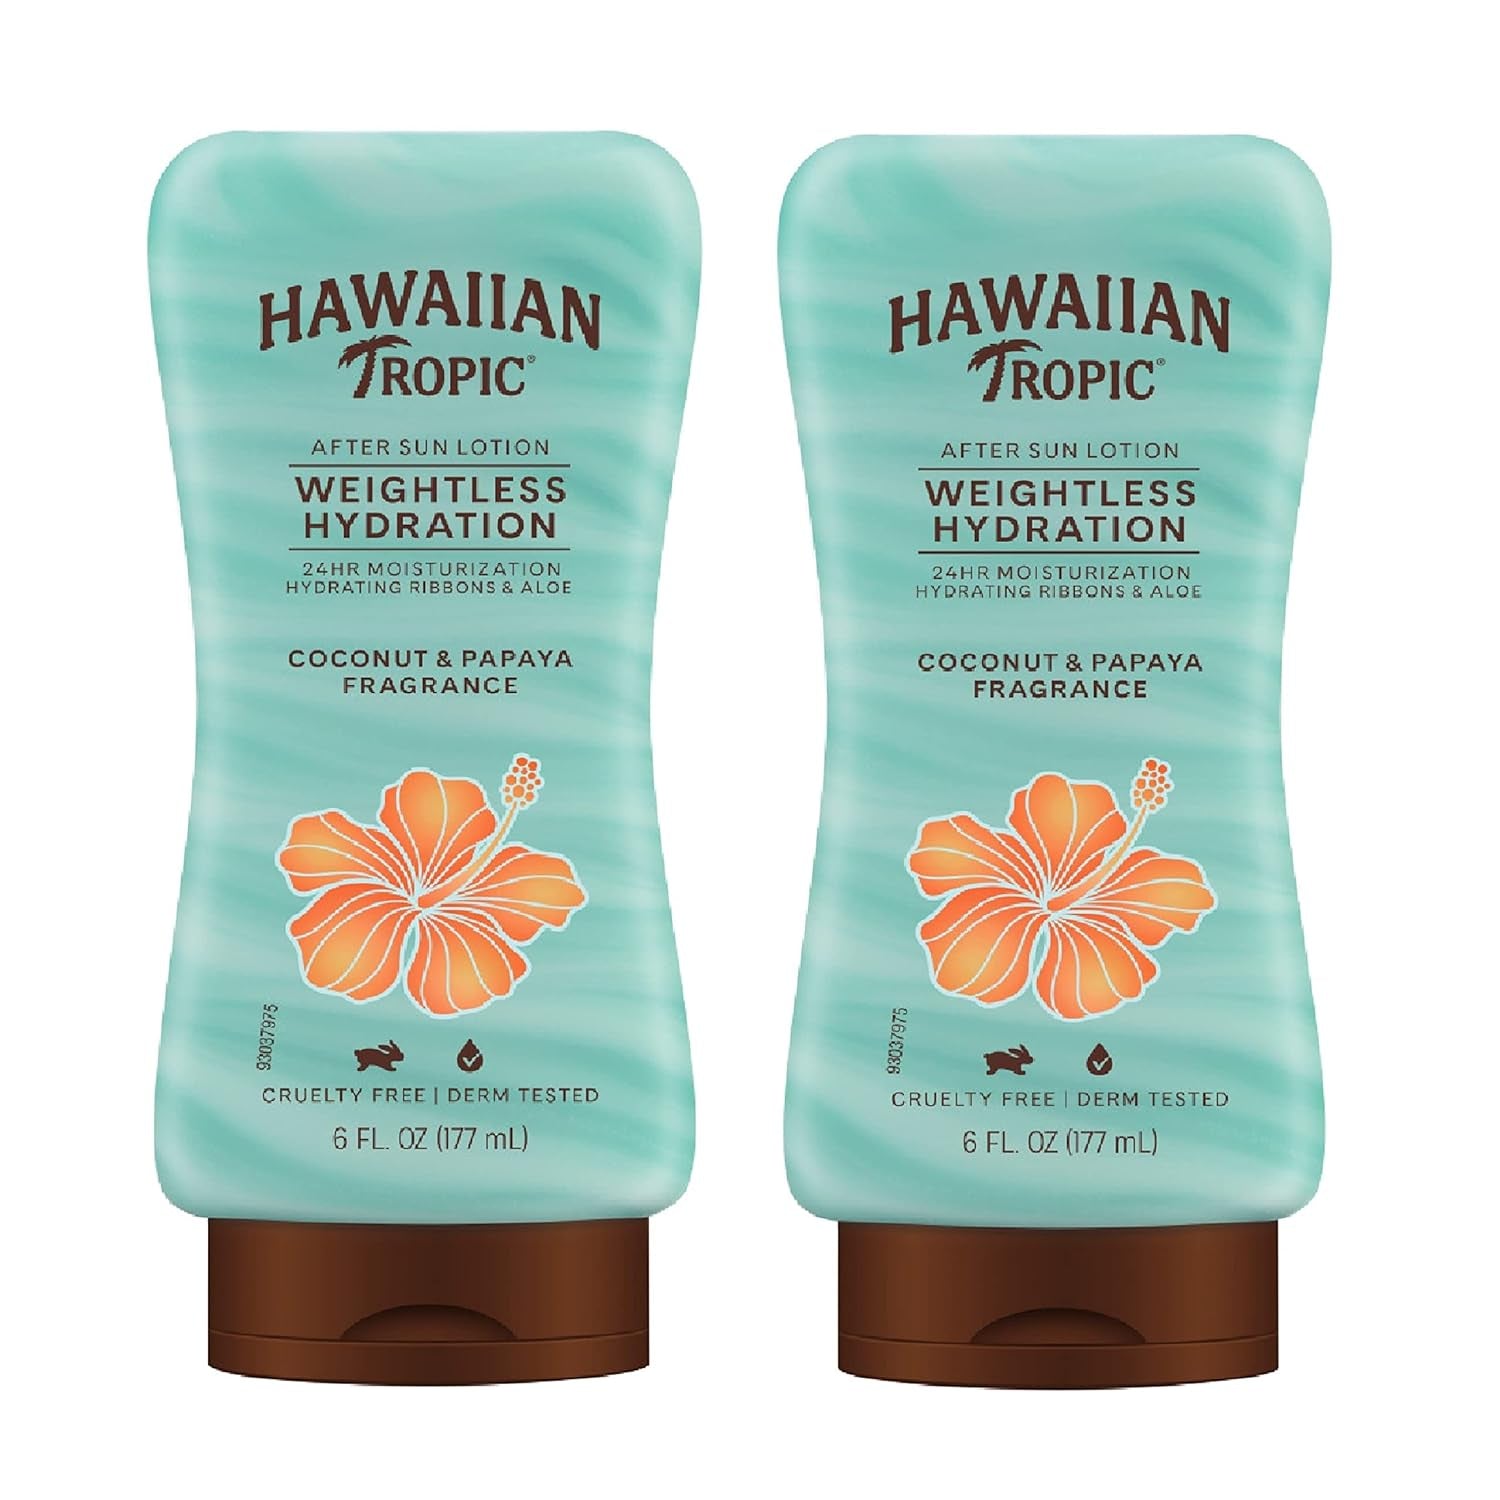 "Hydrating Hawaiian Tropic After Sun Lotion Duo - 6 Fl Oz Each"